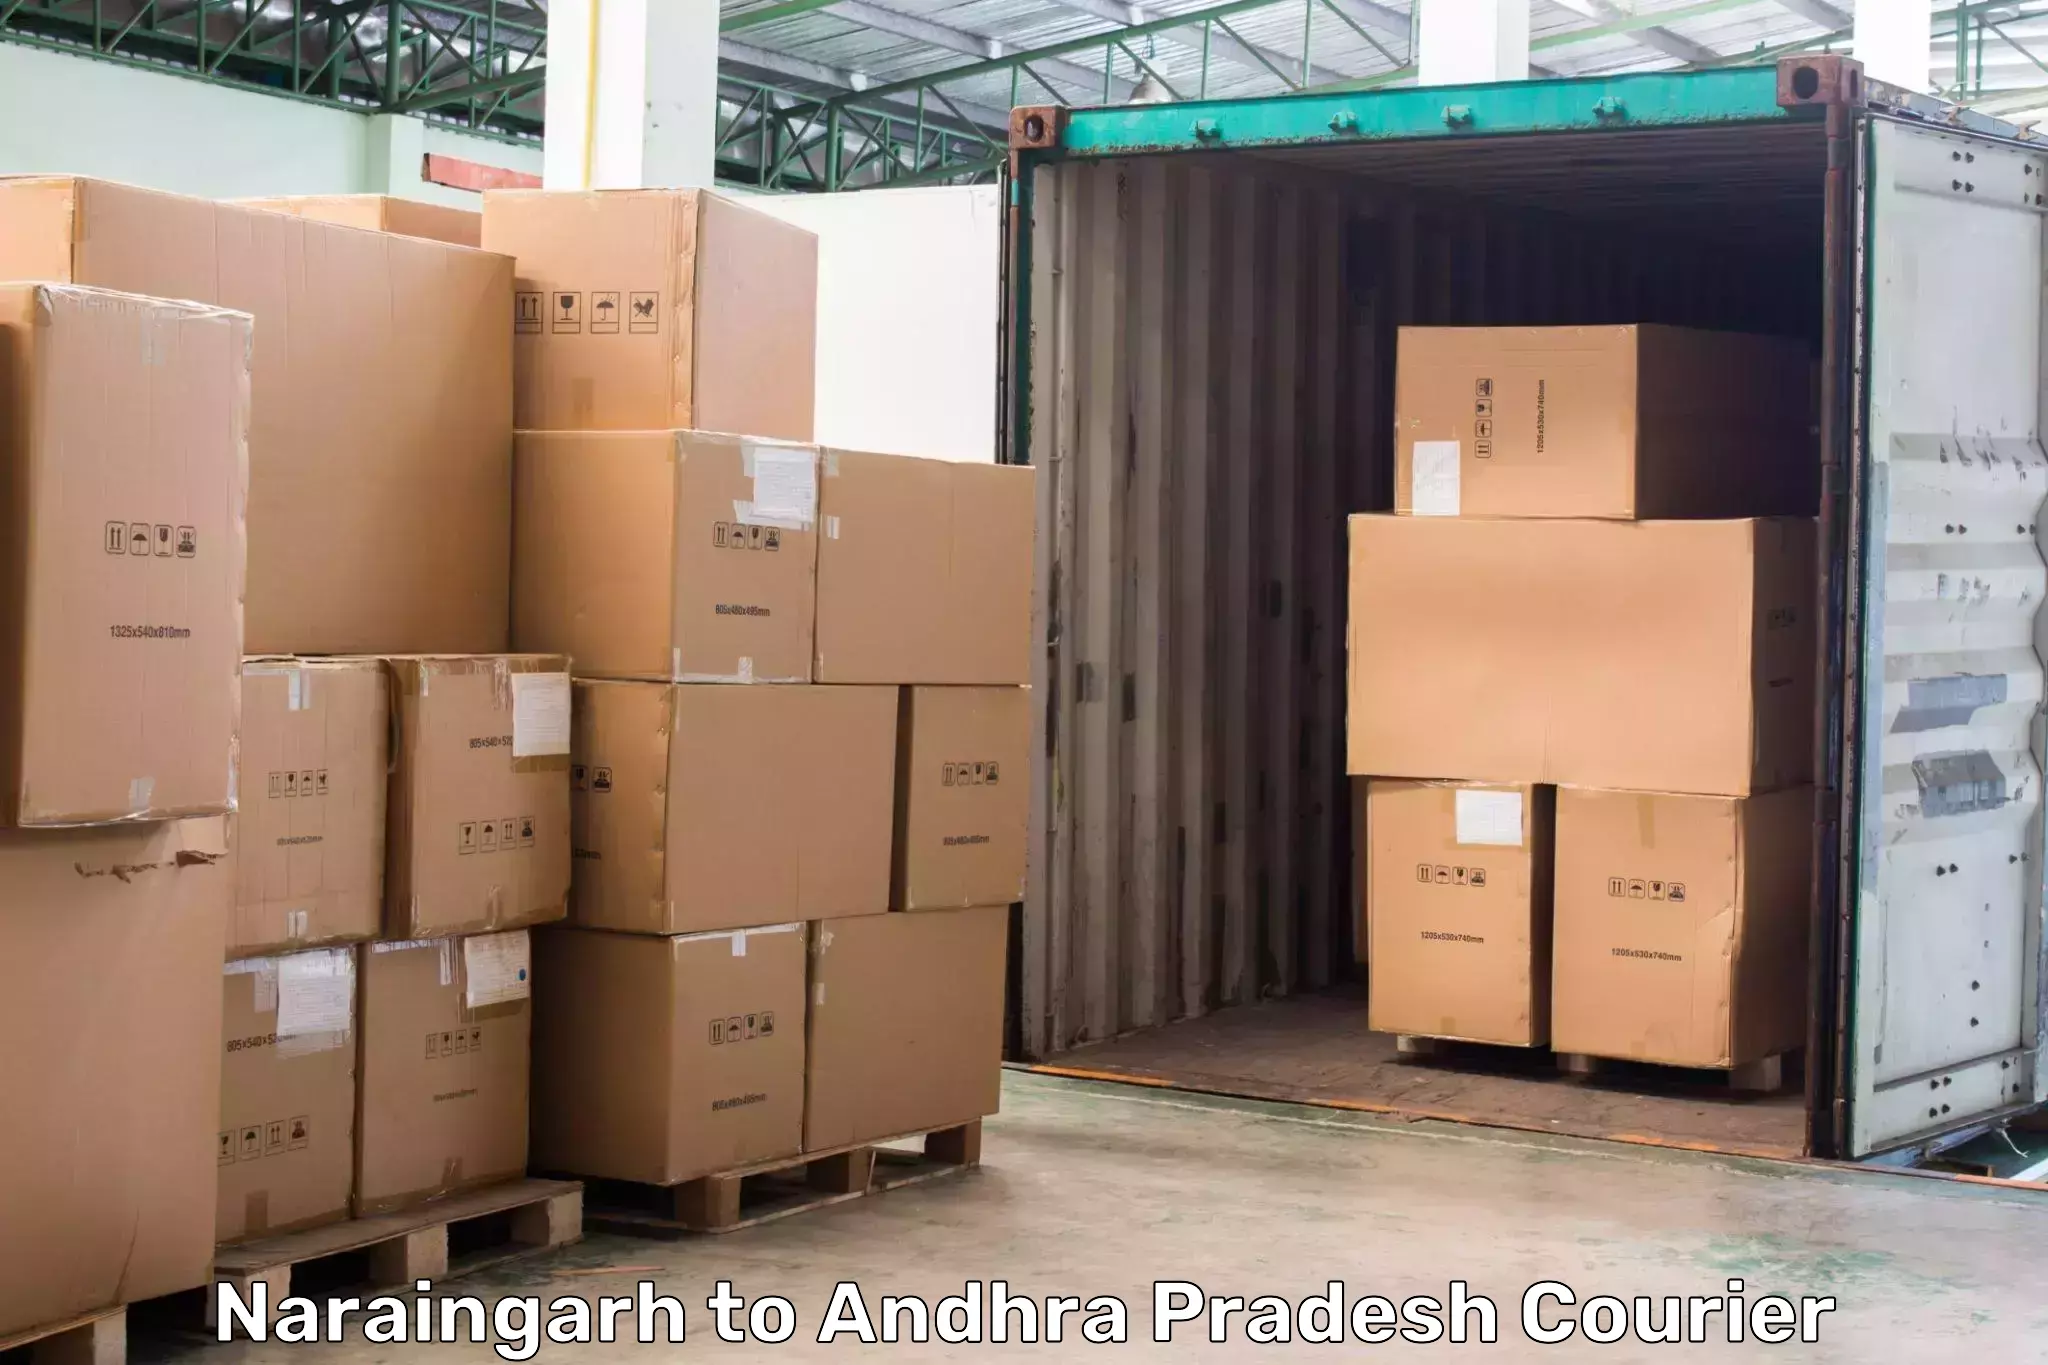 Digital courier platforms Naraingarh to Martur